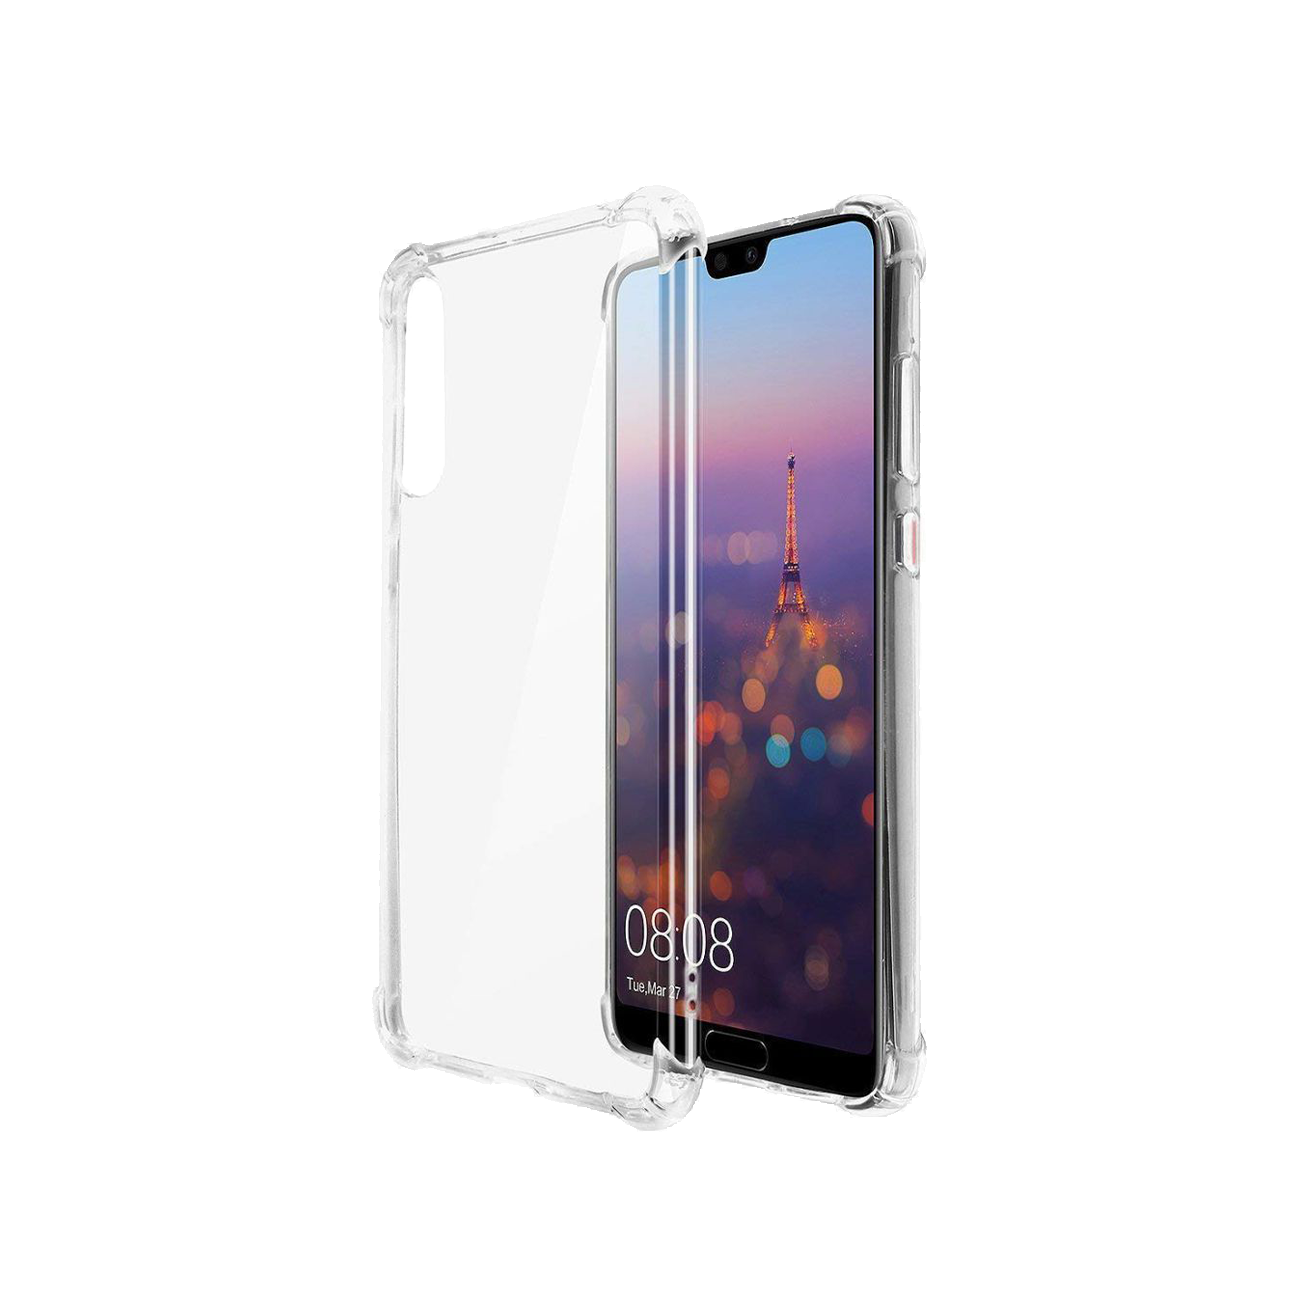 Samsung A7 (2018) Transparent Back Cover | Print More India